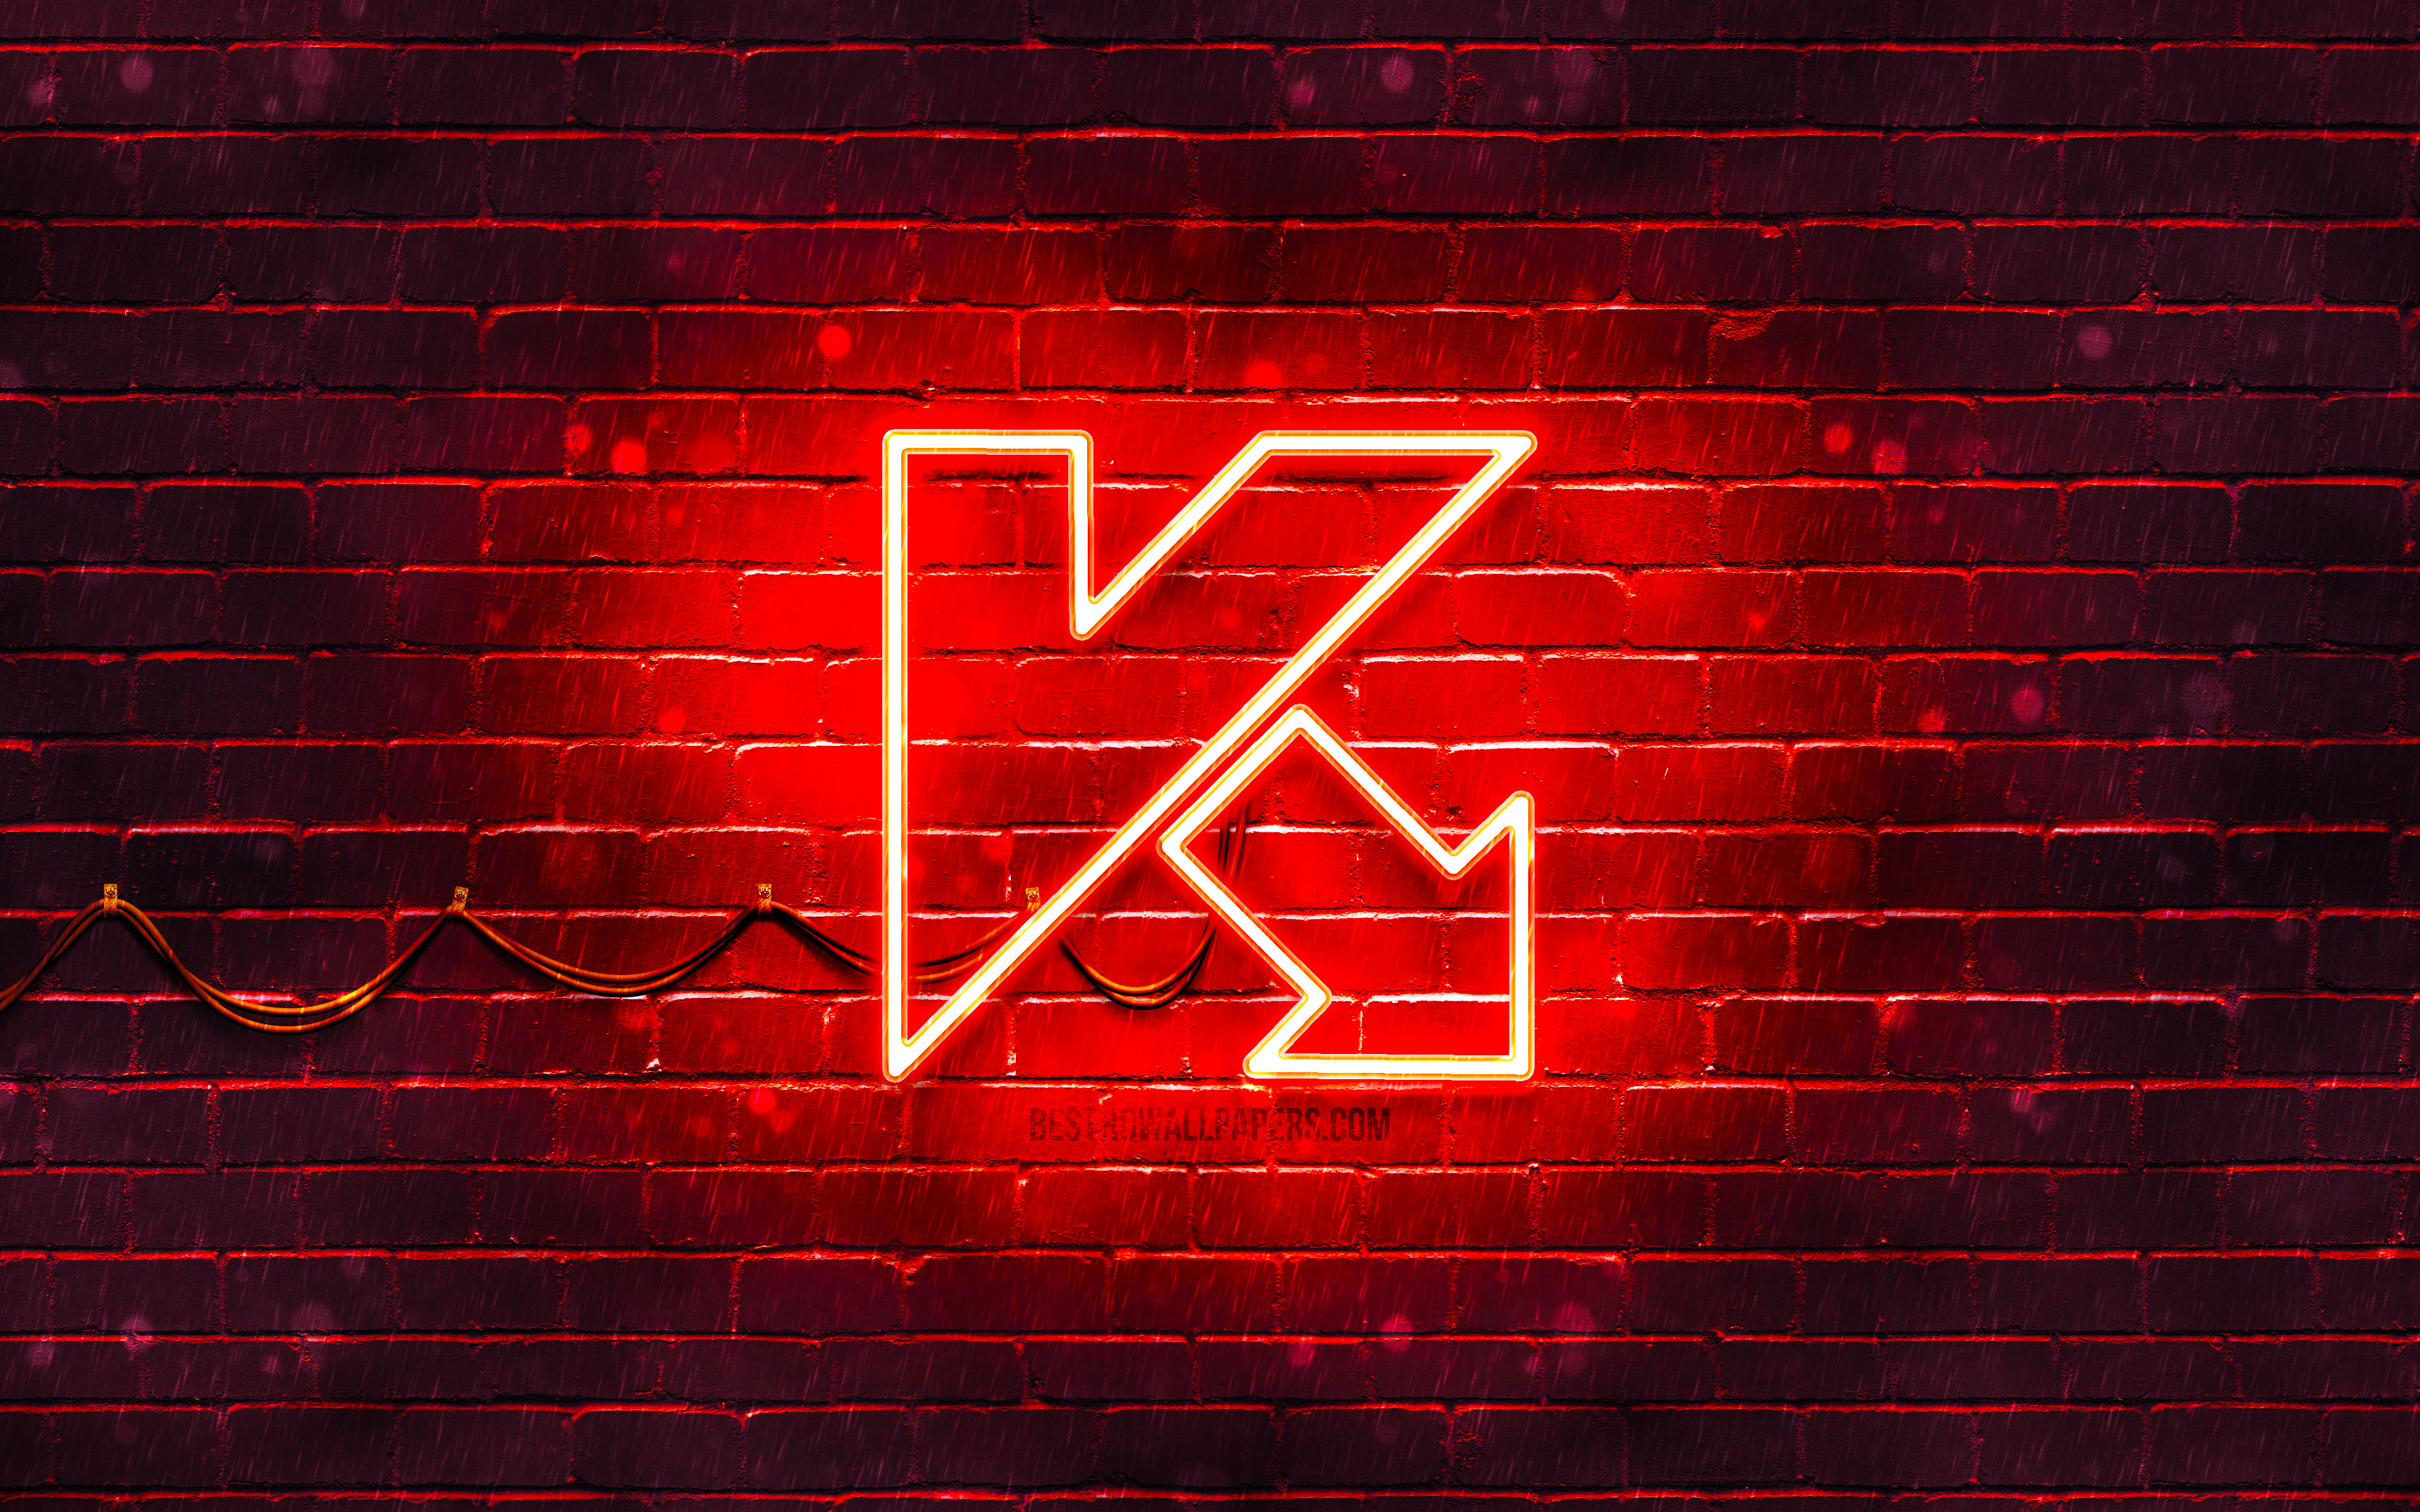 Download wallpaper Kaspersky red logo, 4k, red brickwall, Kaspersky logo, antivirus software, Kaspersky neon logo, Kaspersky for desktop with resolution 3840x2400. High Quality HD picture wallpaper